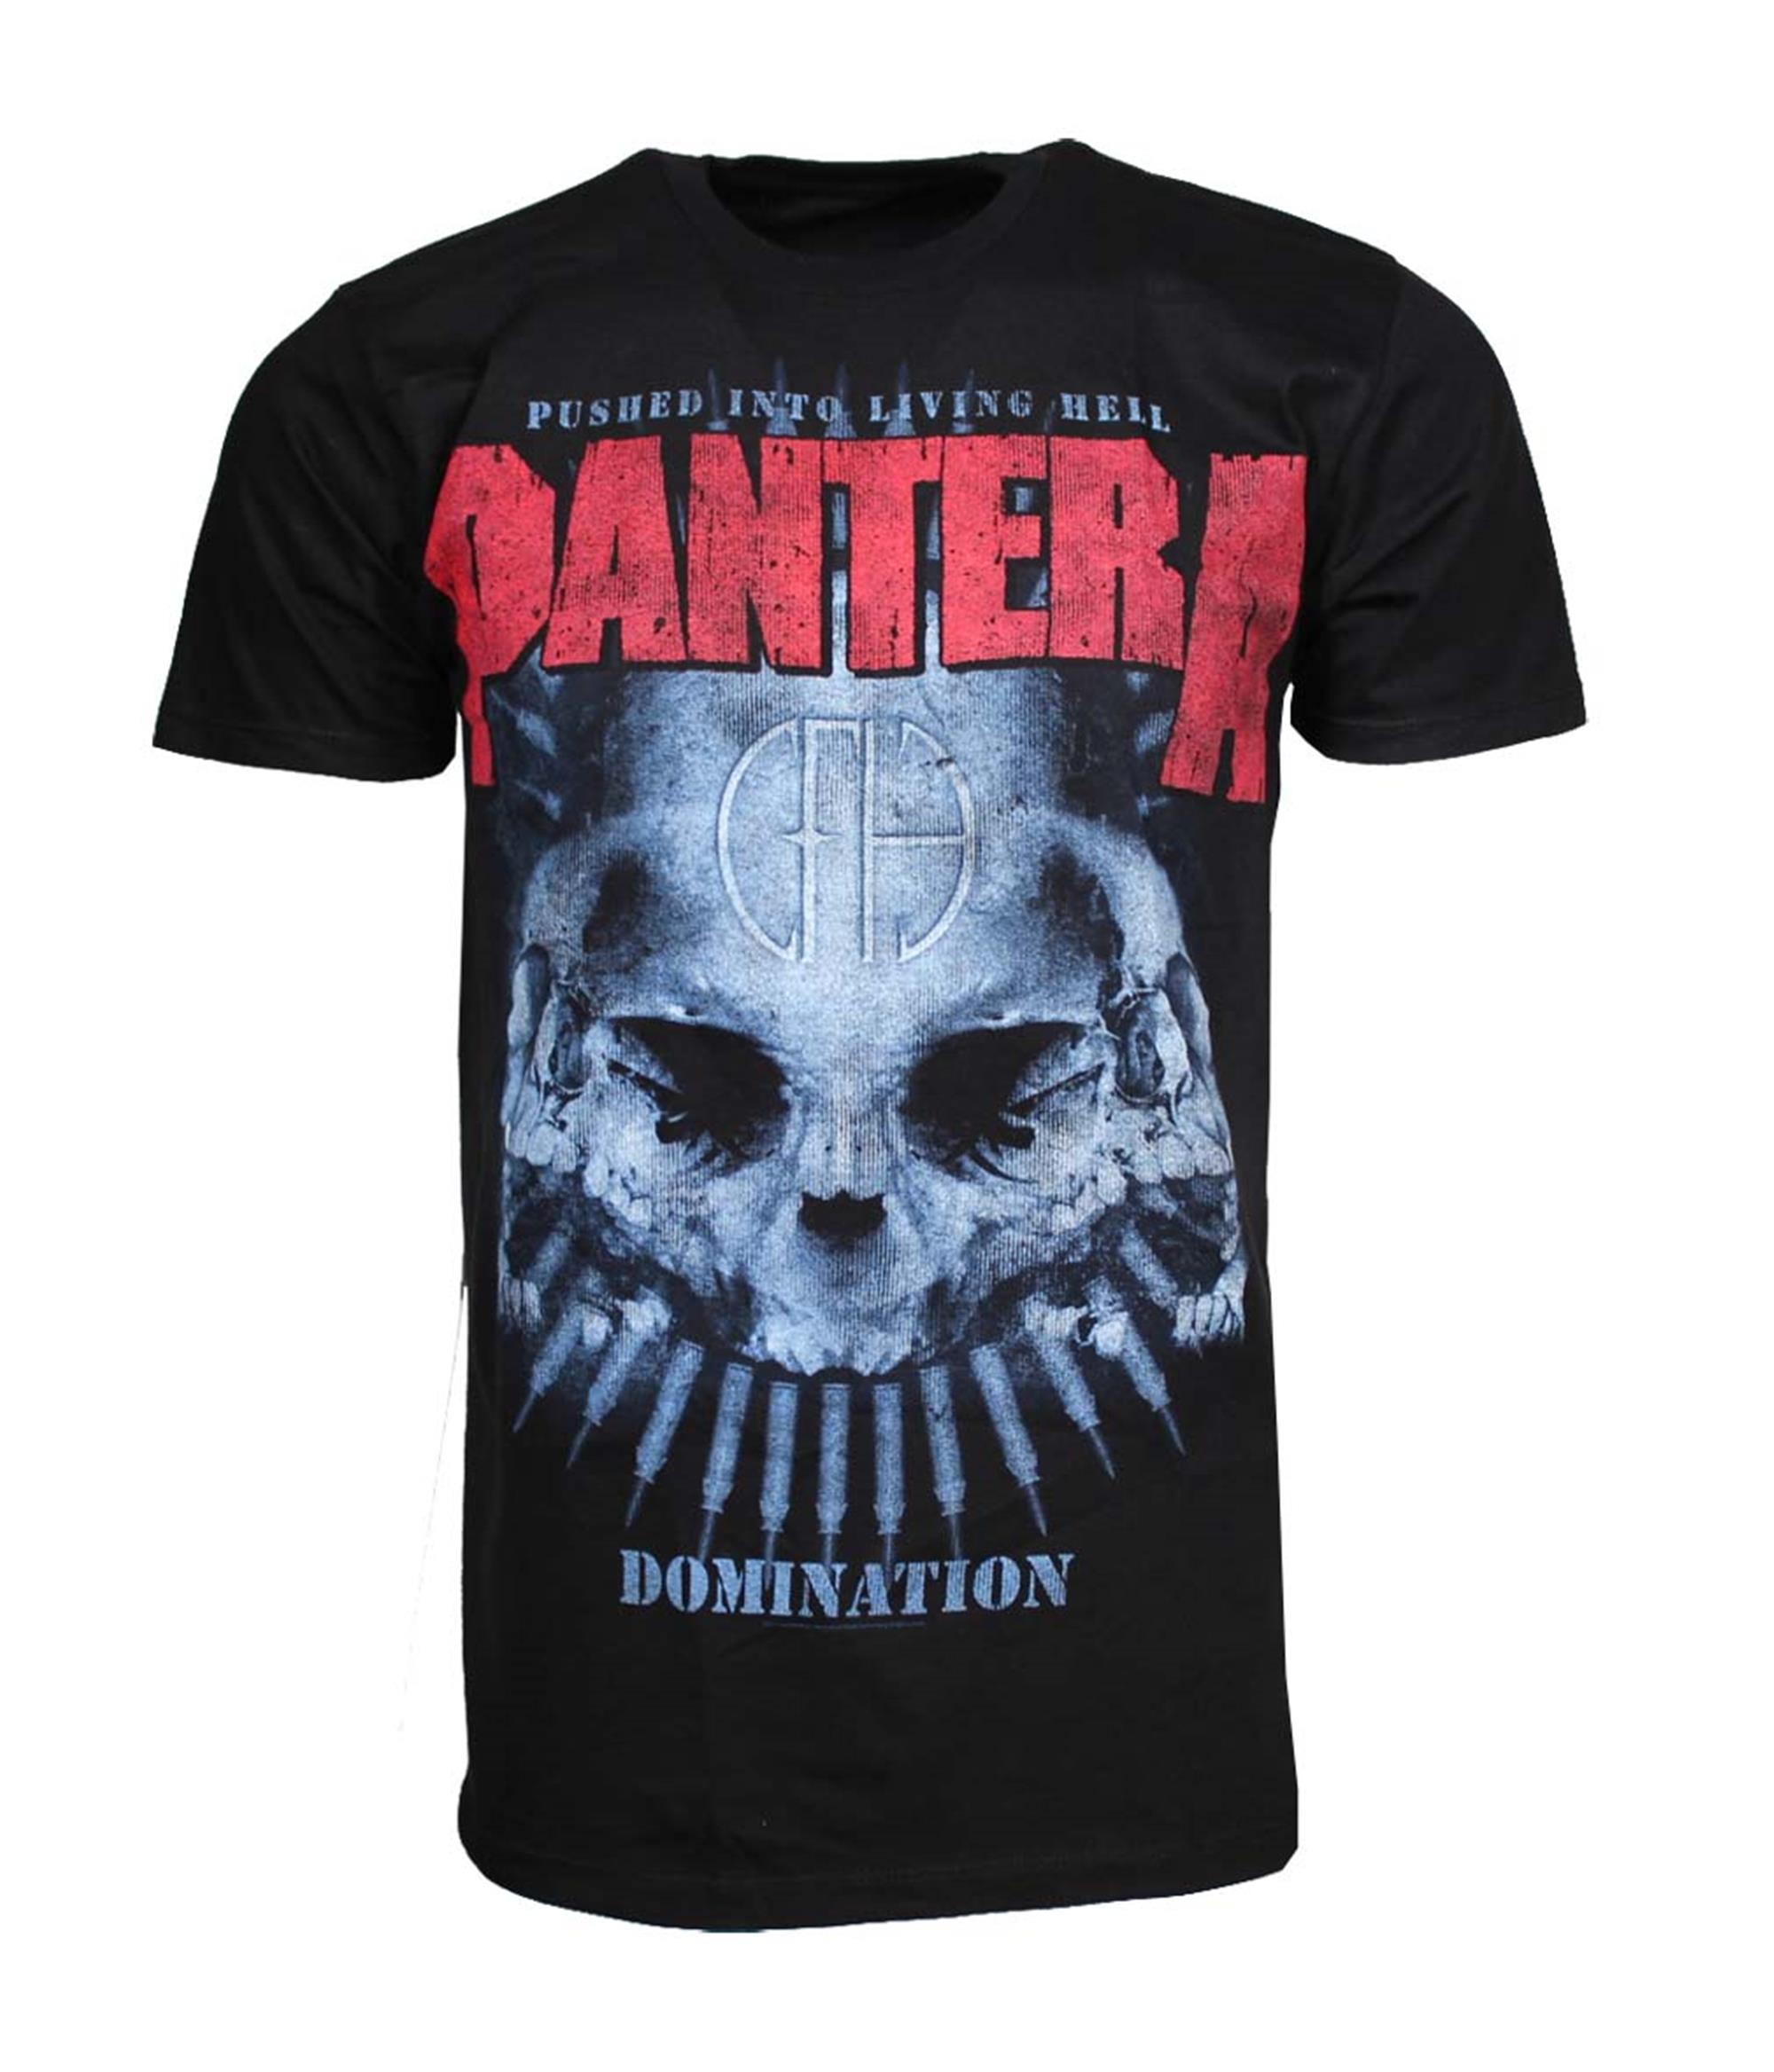 Pantera Domination Distressed Print T-Shirt